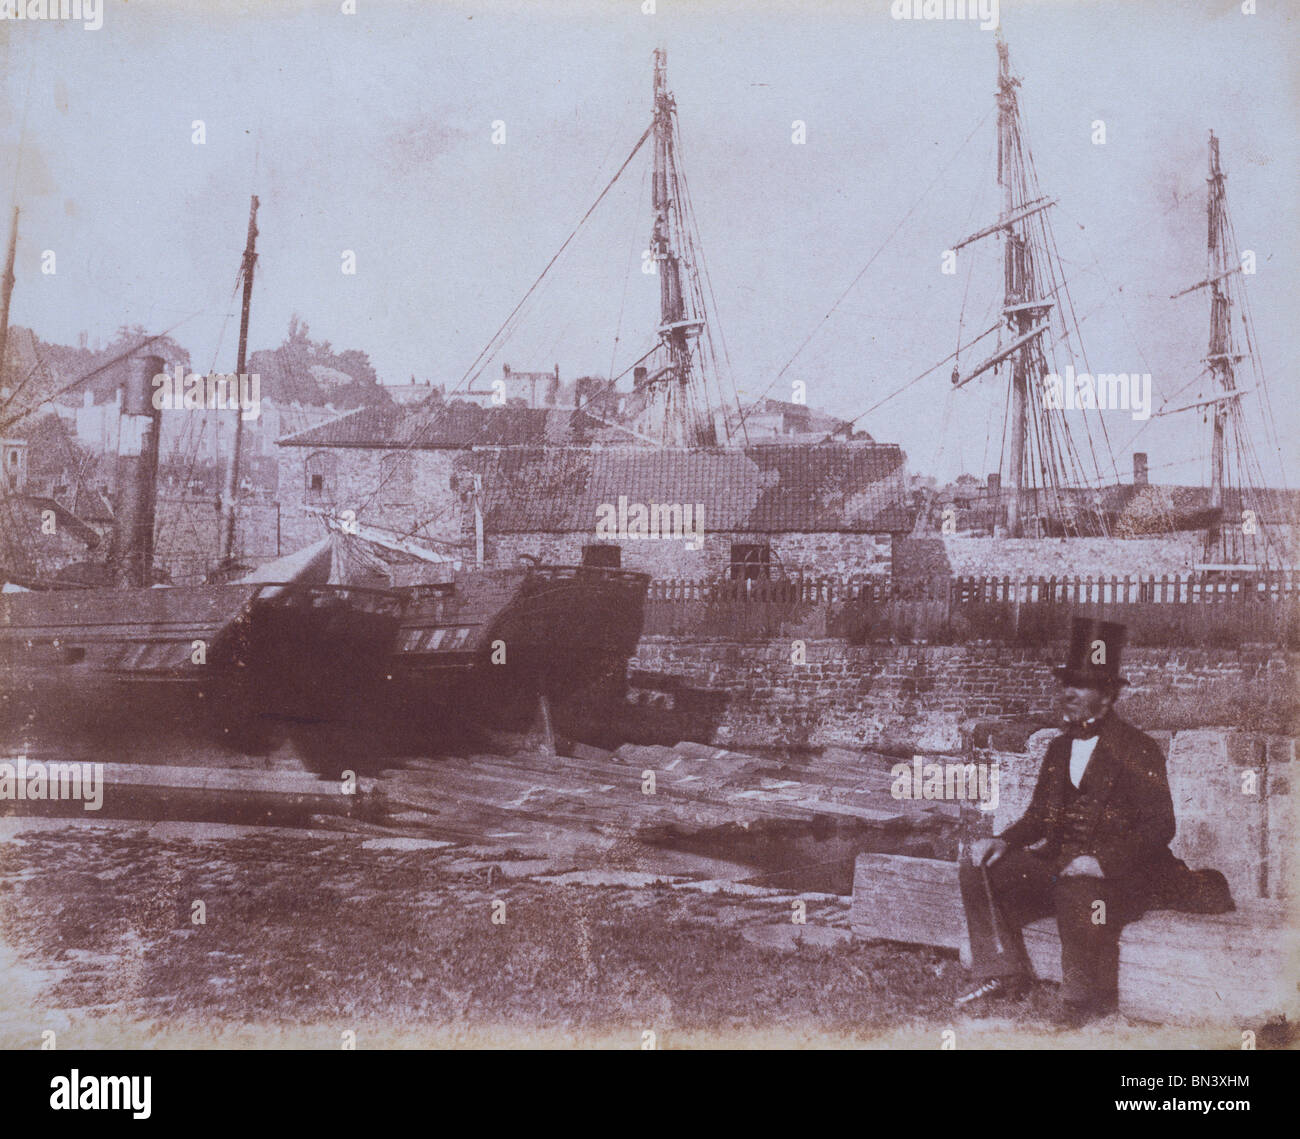 La scena del porto, photo Calvert Jones. Inghilterra, secolo XIX Foto Stock